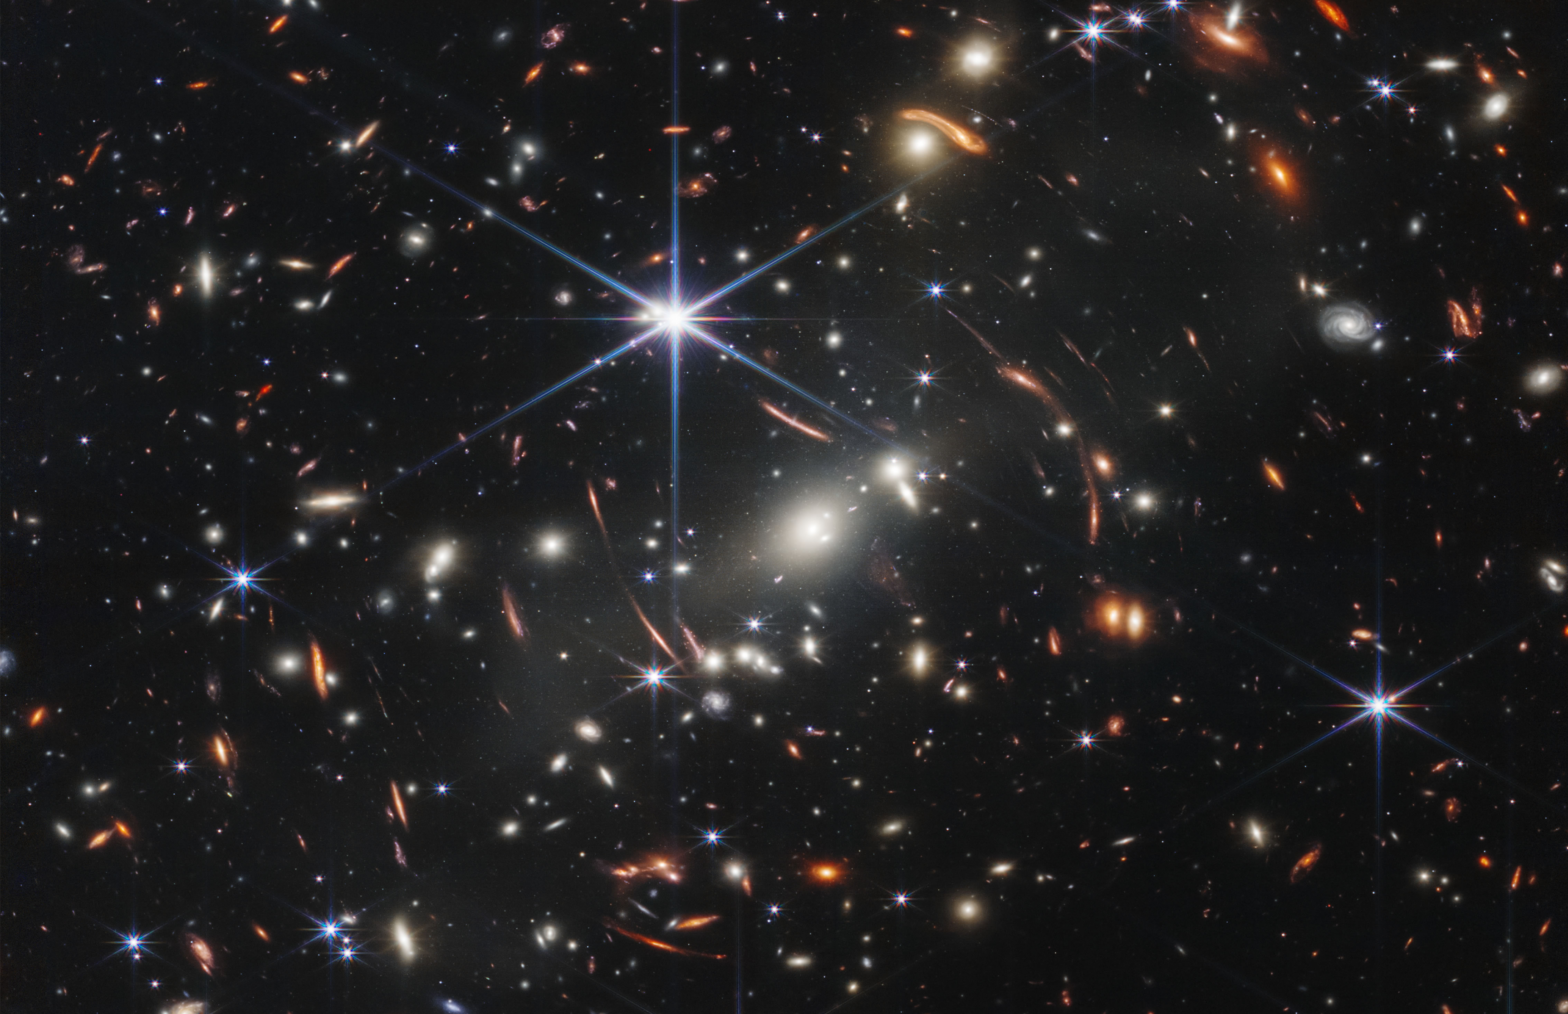 James Webb Space Telescope Deep Field 0723 showing millions of galaxies 4 Billion light years away.